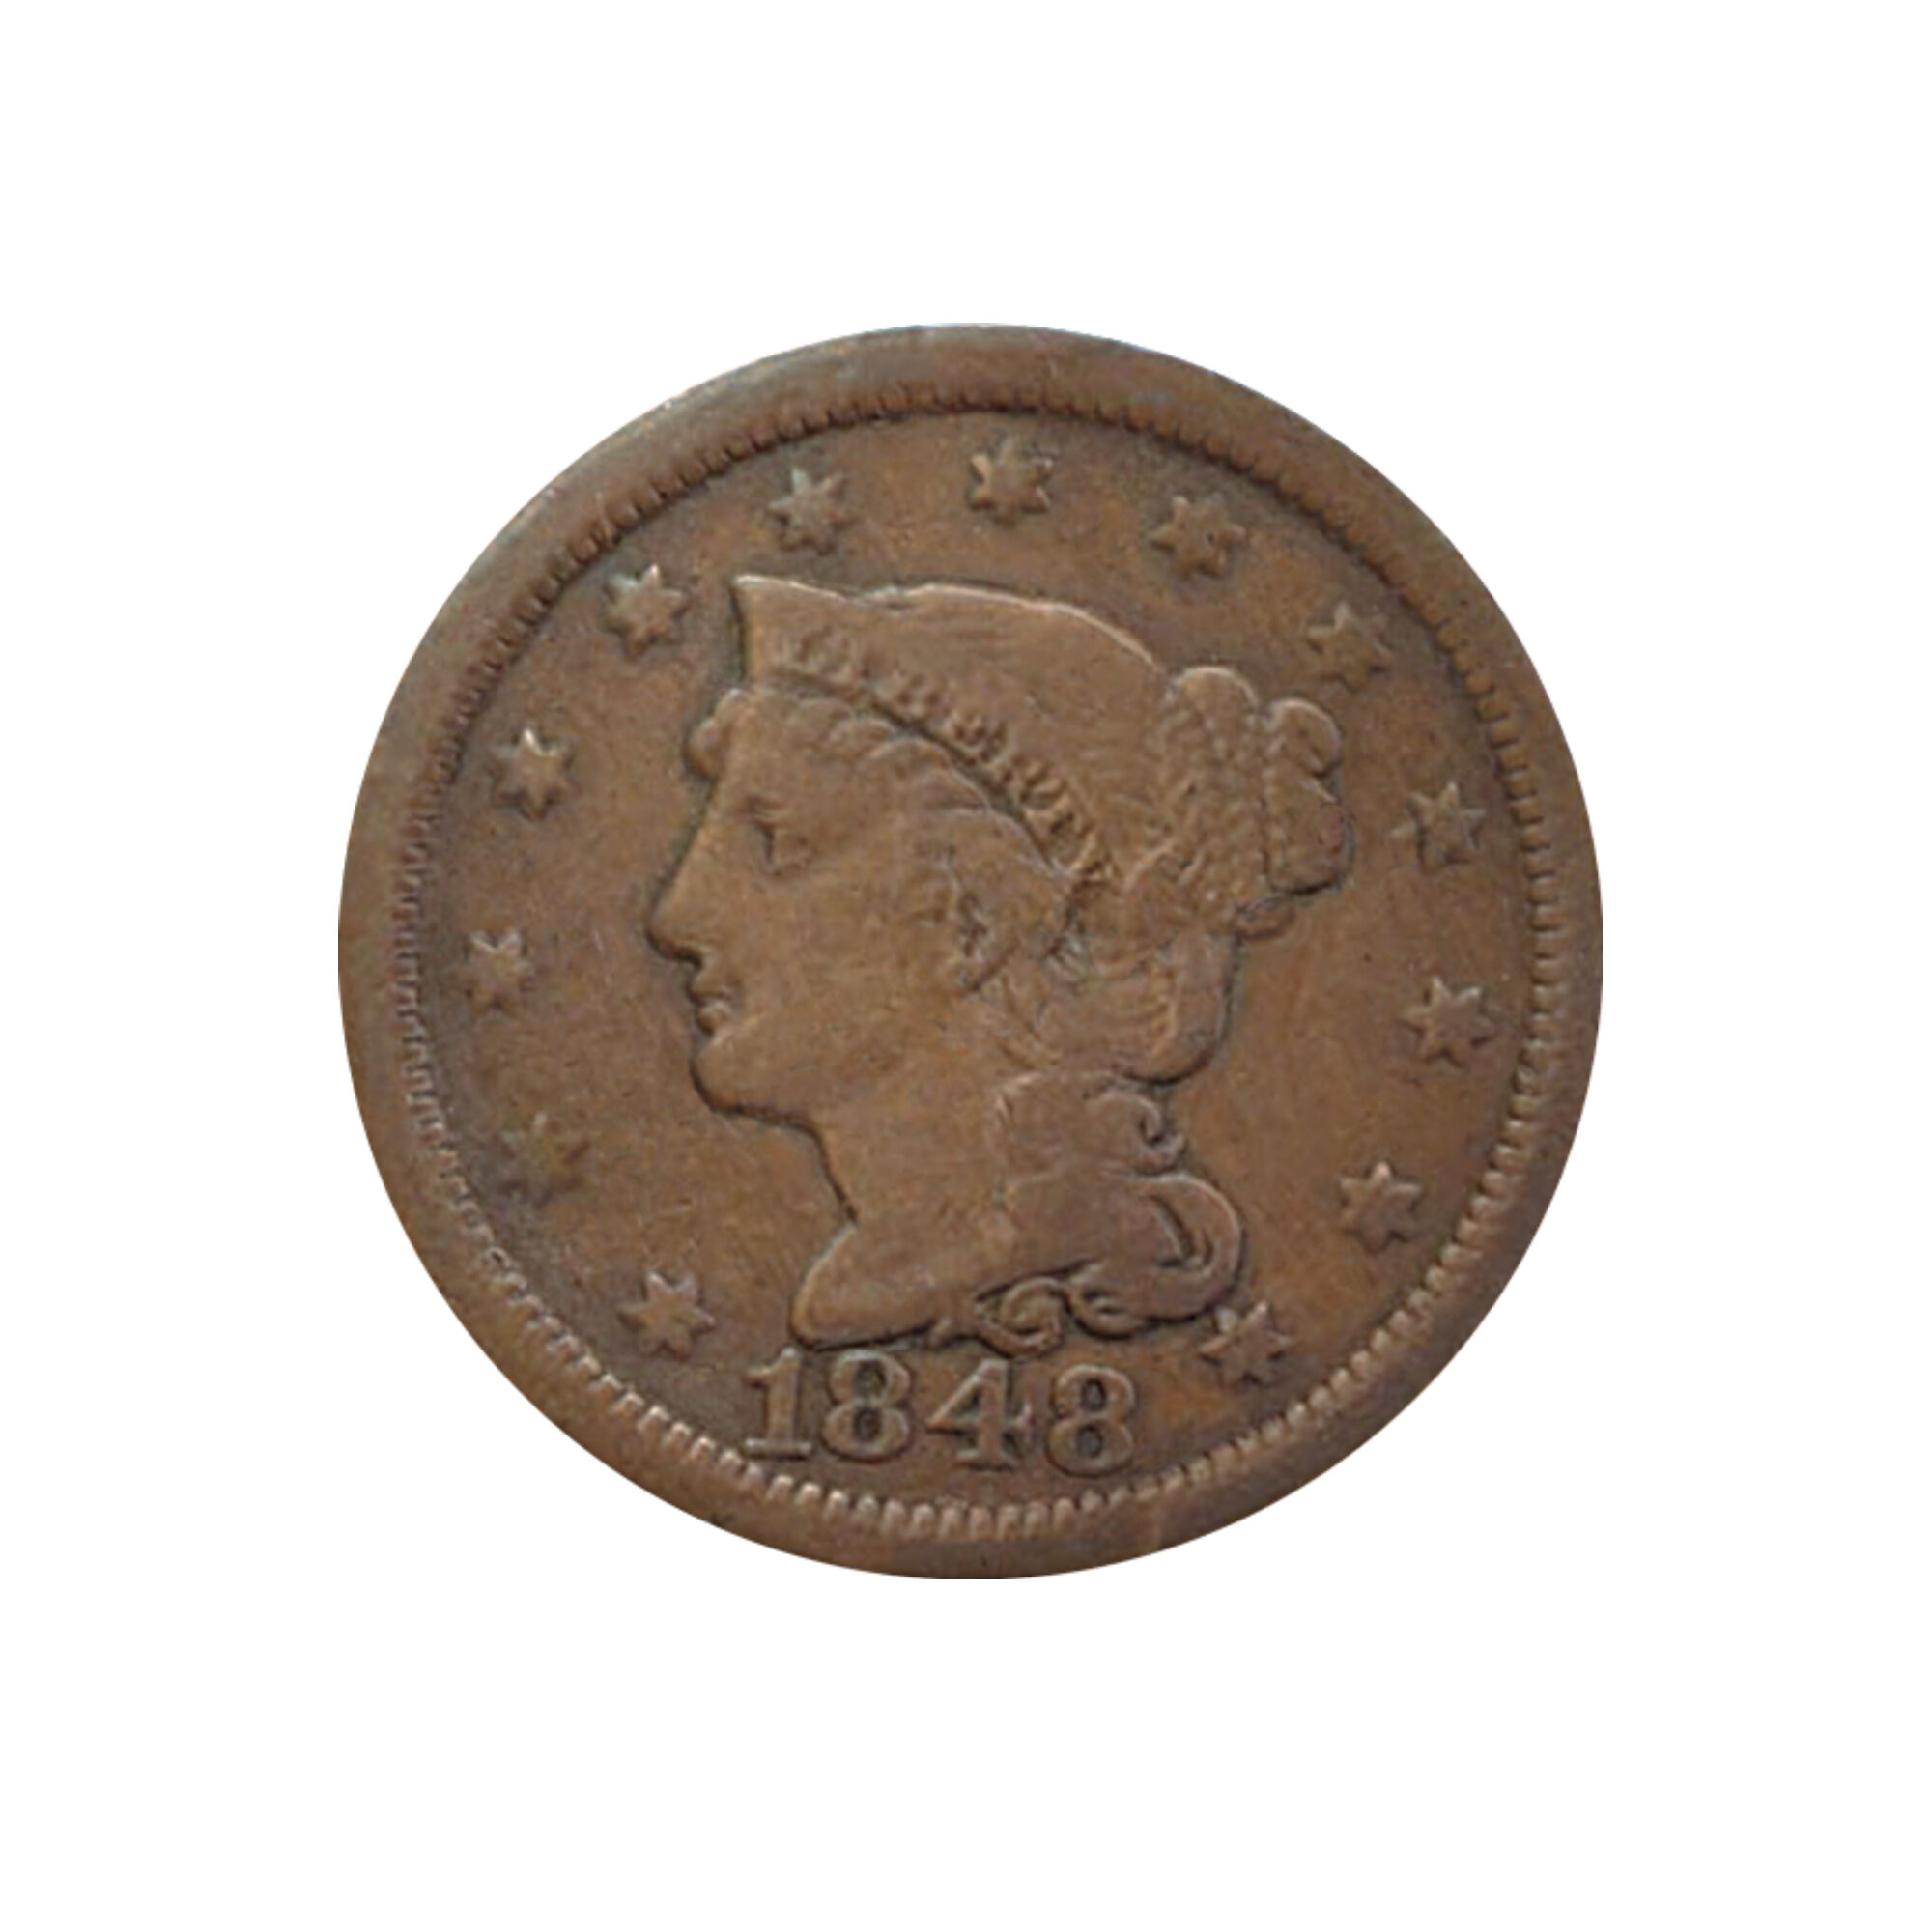 The Rare Cent Coin Collection 5218 0056 d coin